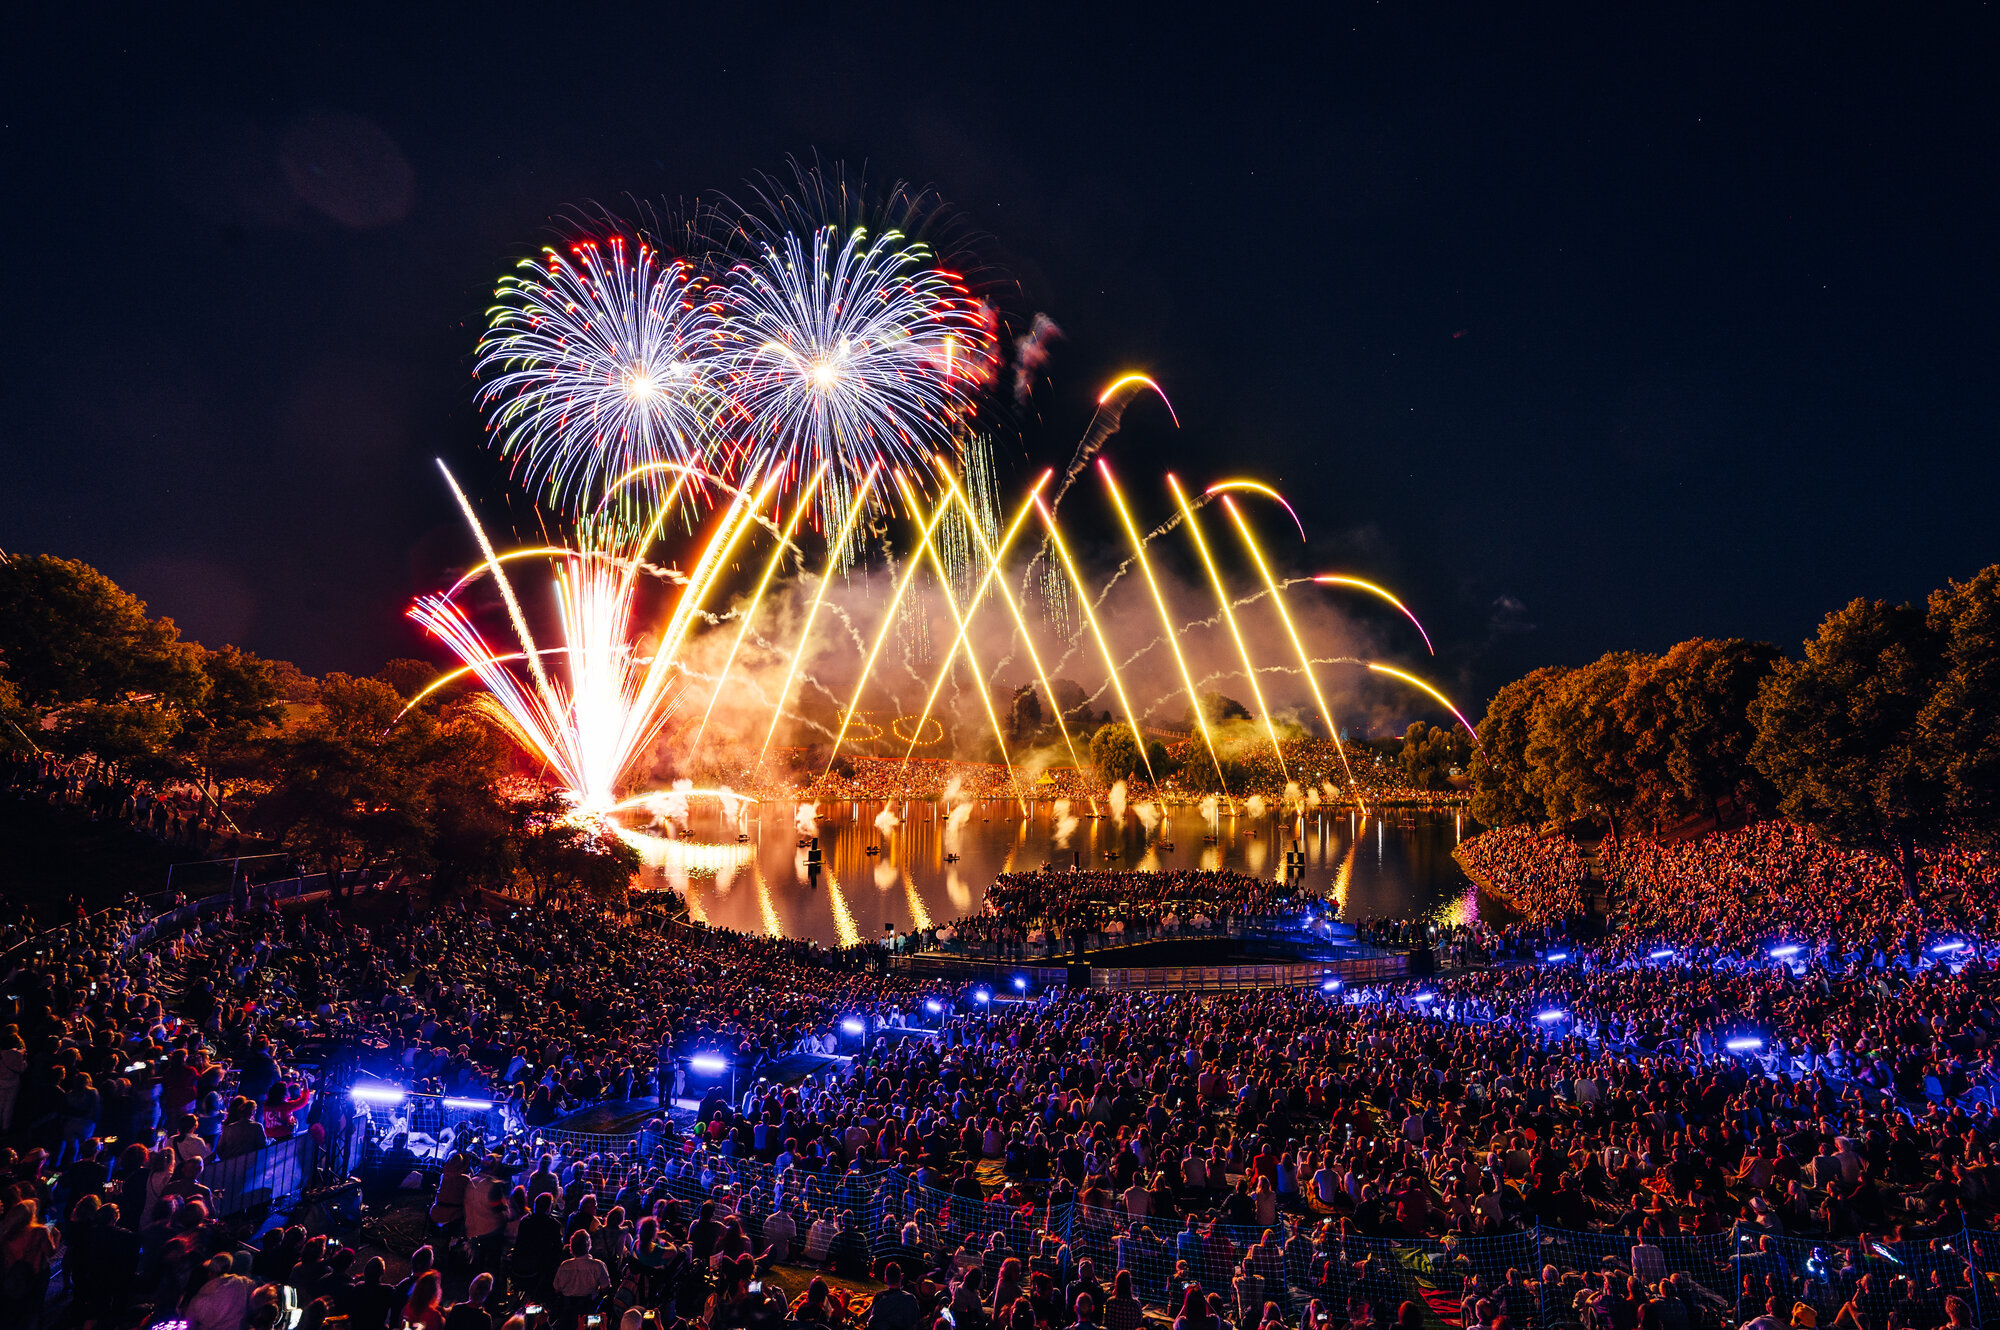 34,000 fans celebrate at Midsummer Night's Dream 2022